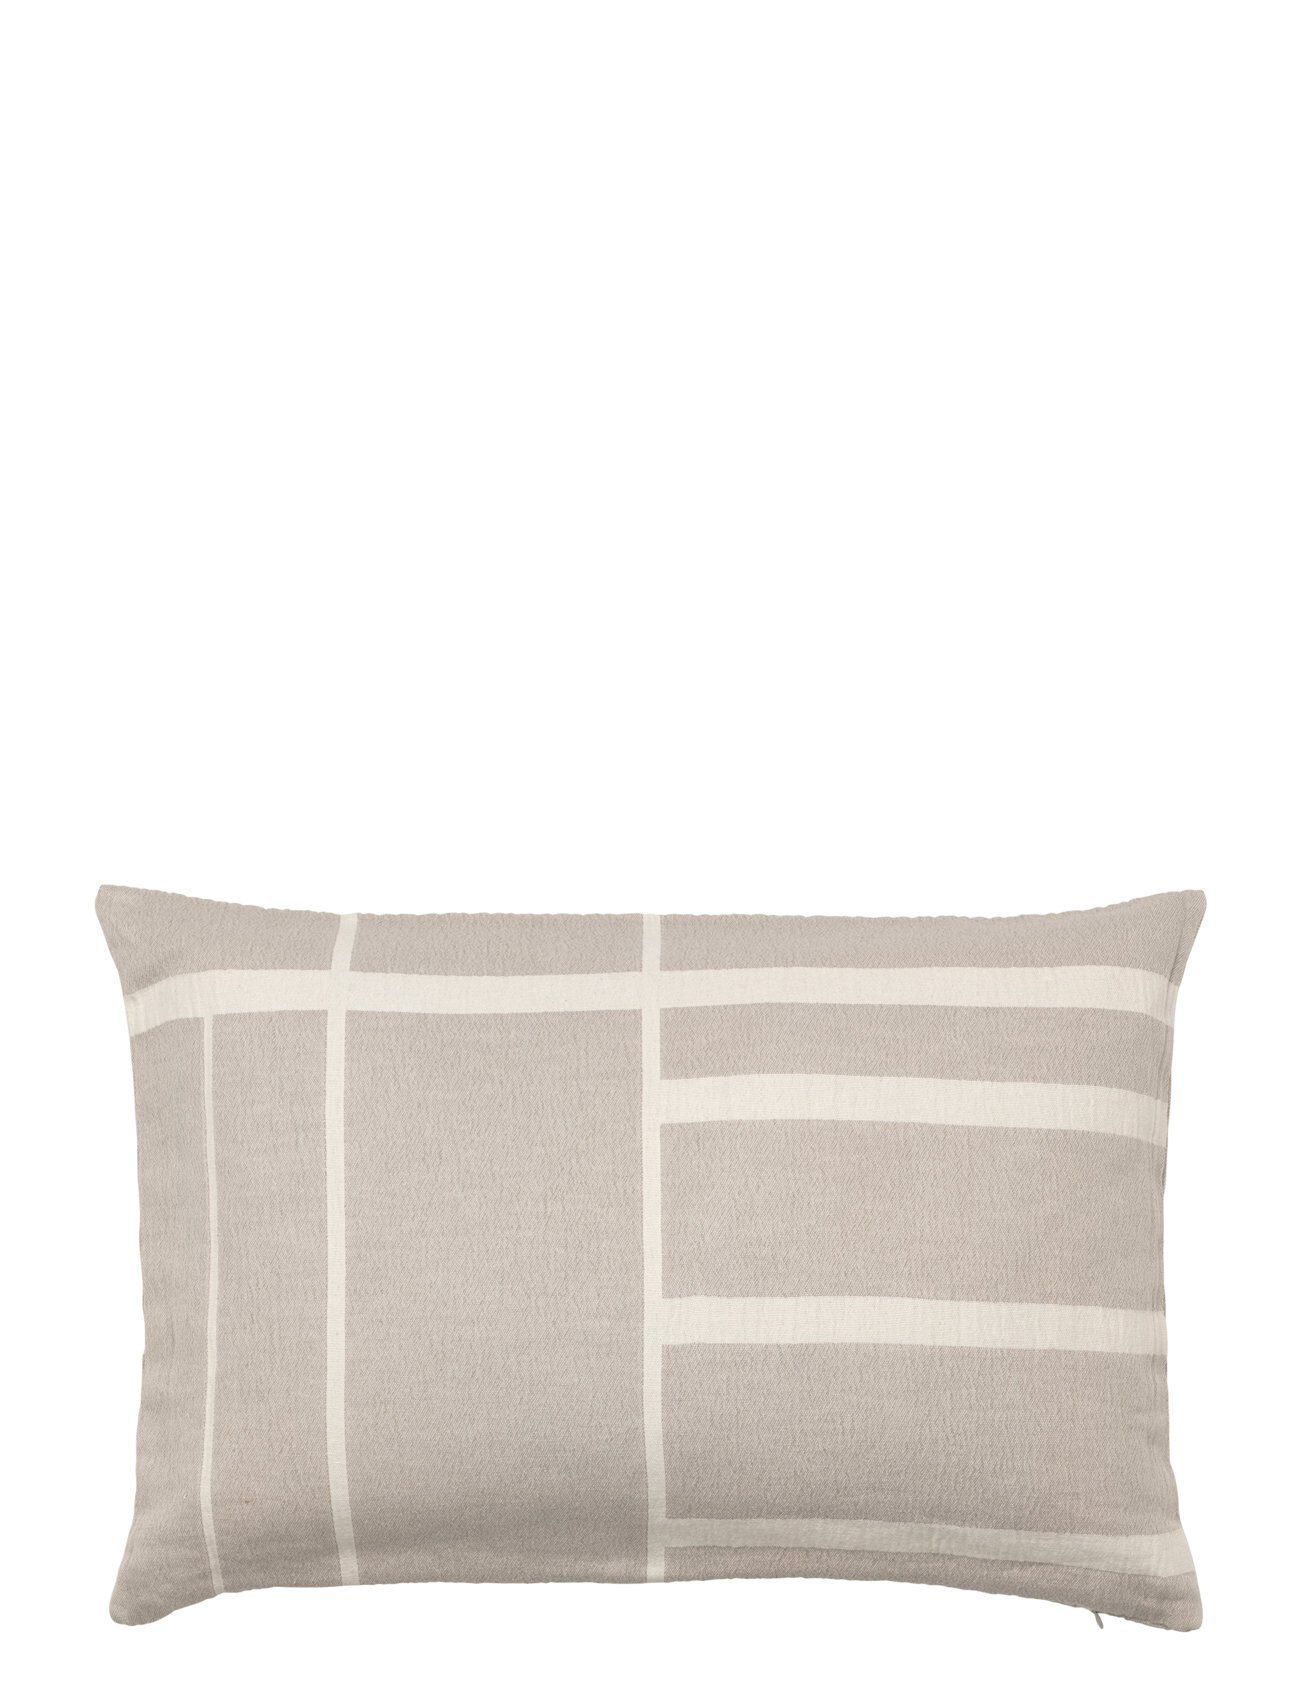 Kristina Dam Studio Architecture Cushion - Cotton Home Textiles Cushions & Blankets Cushions Beige Kristina Dam Studio